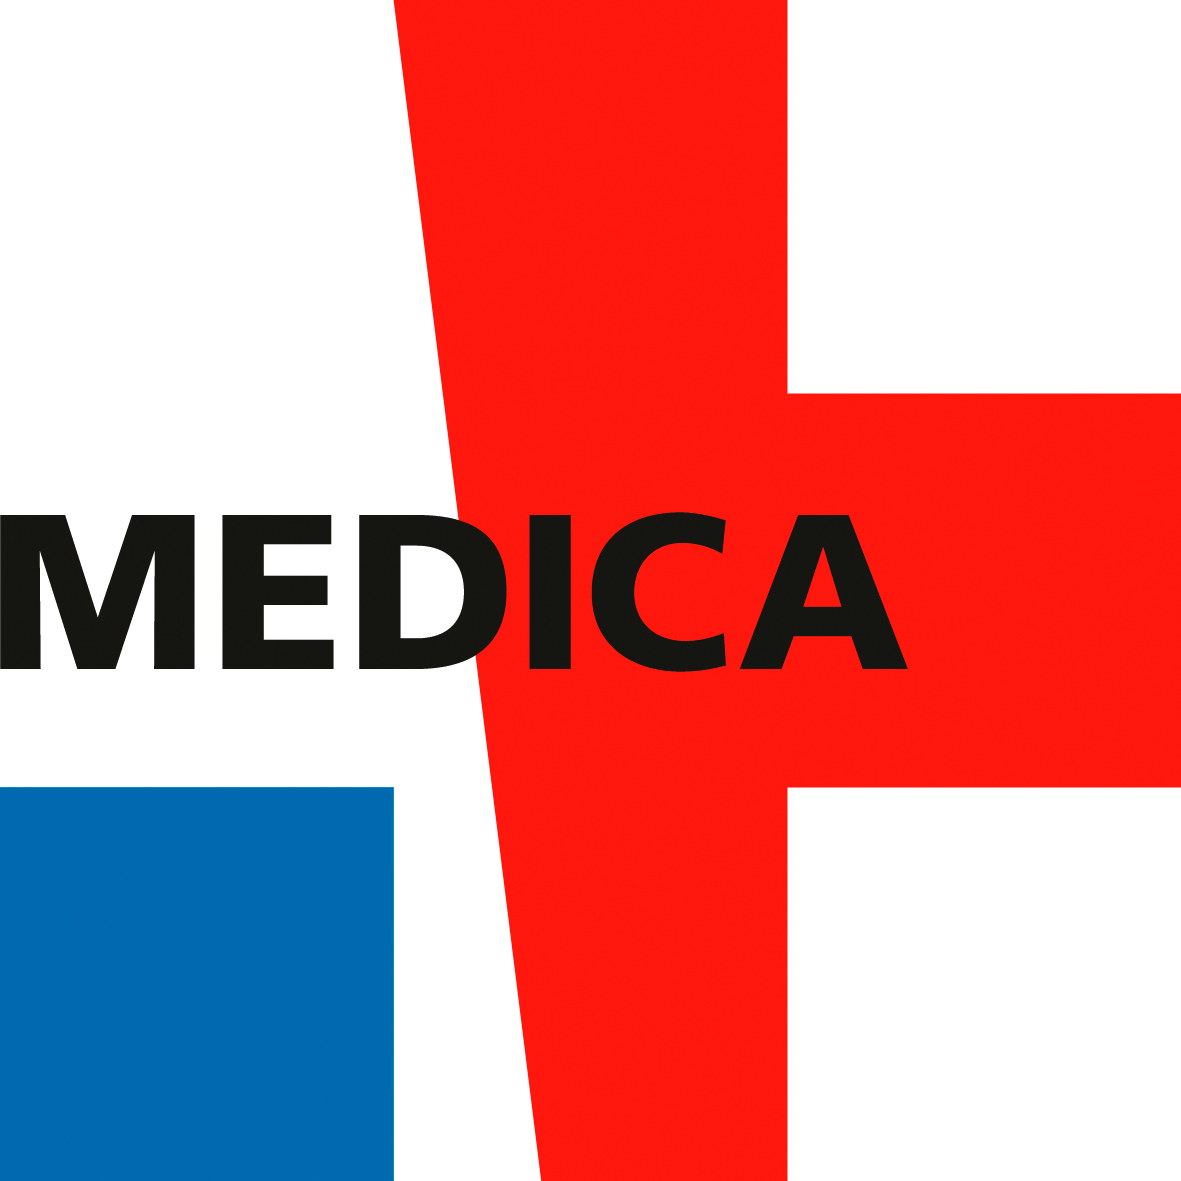 medica_logo_srgb